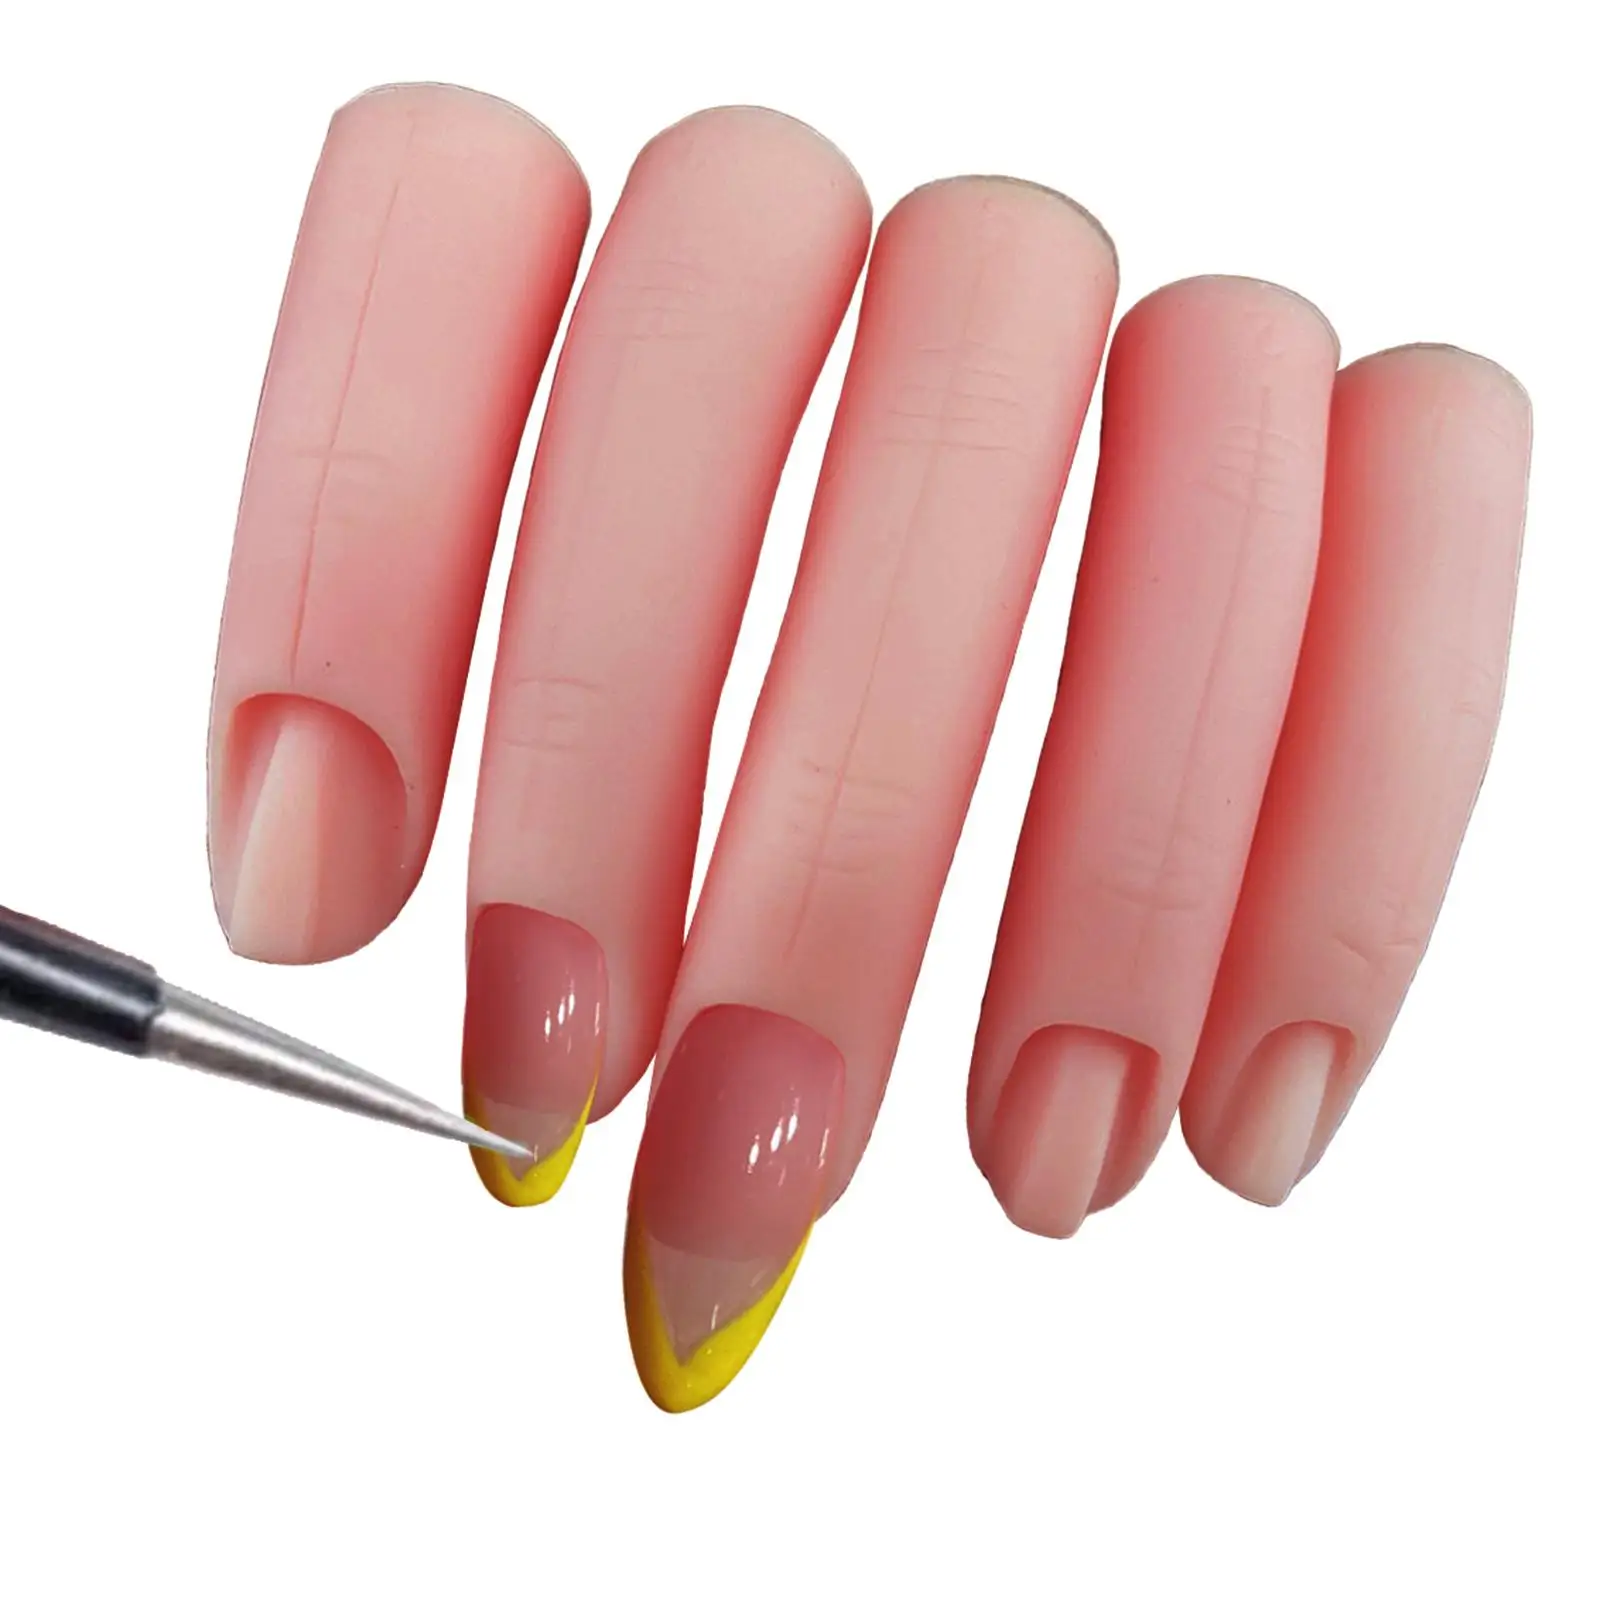 Silicone Practice Finger Manicure False Fingers for Nails Practice Beginner